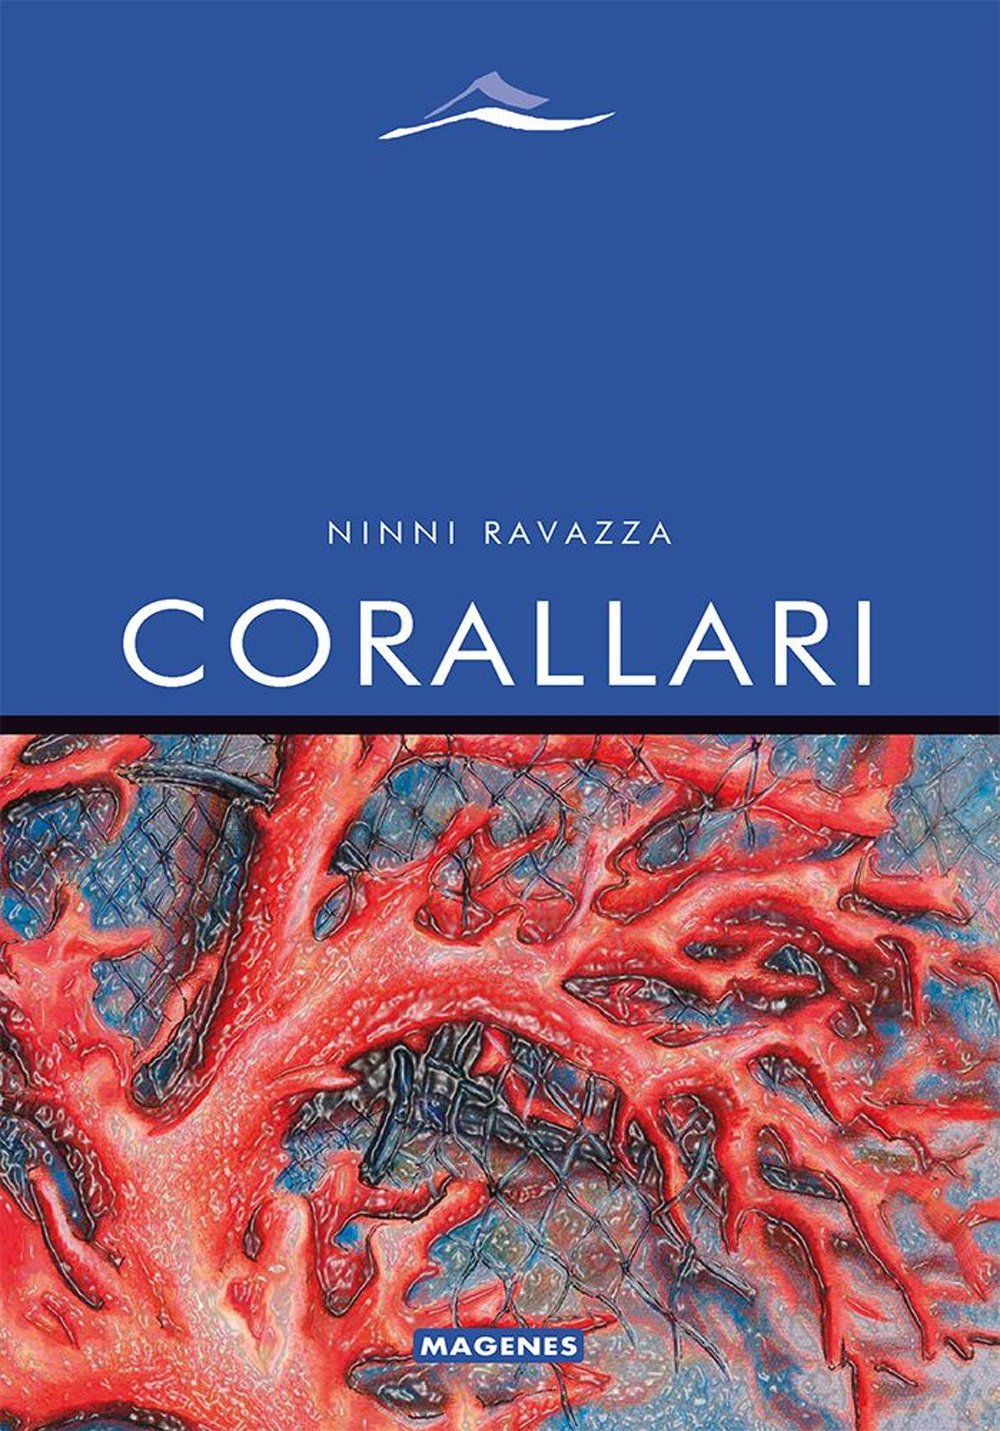 Corallari